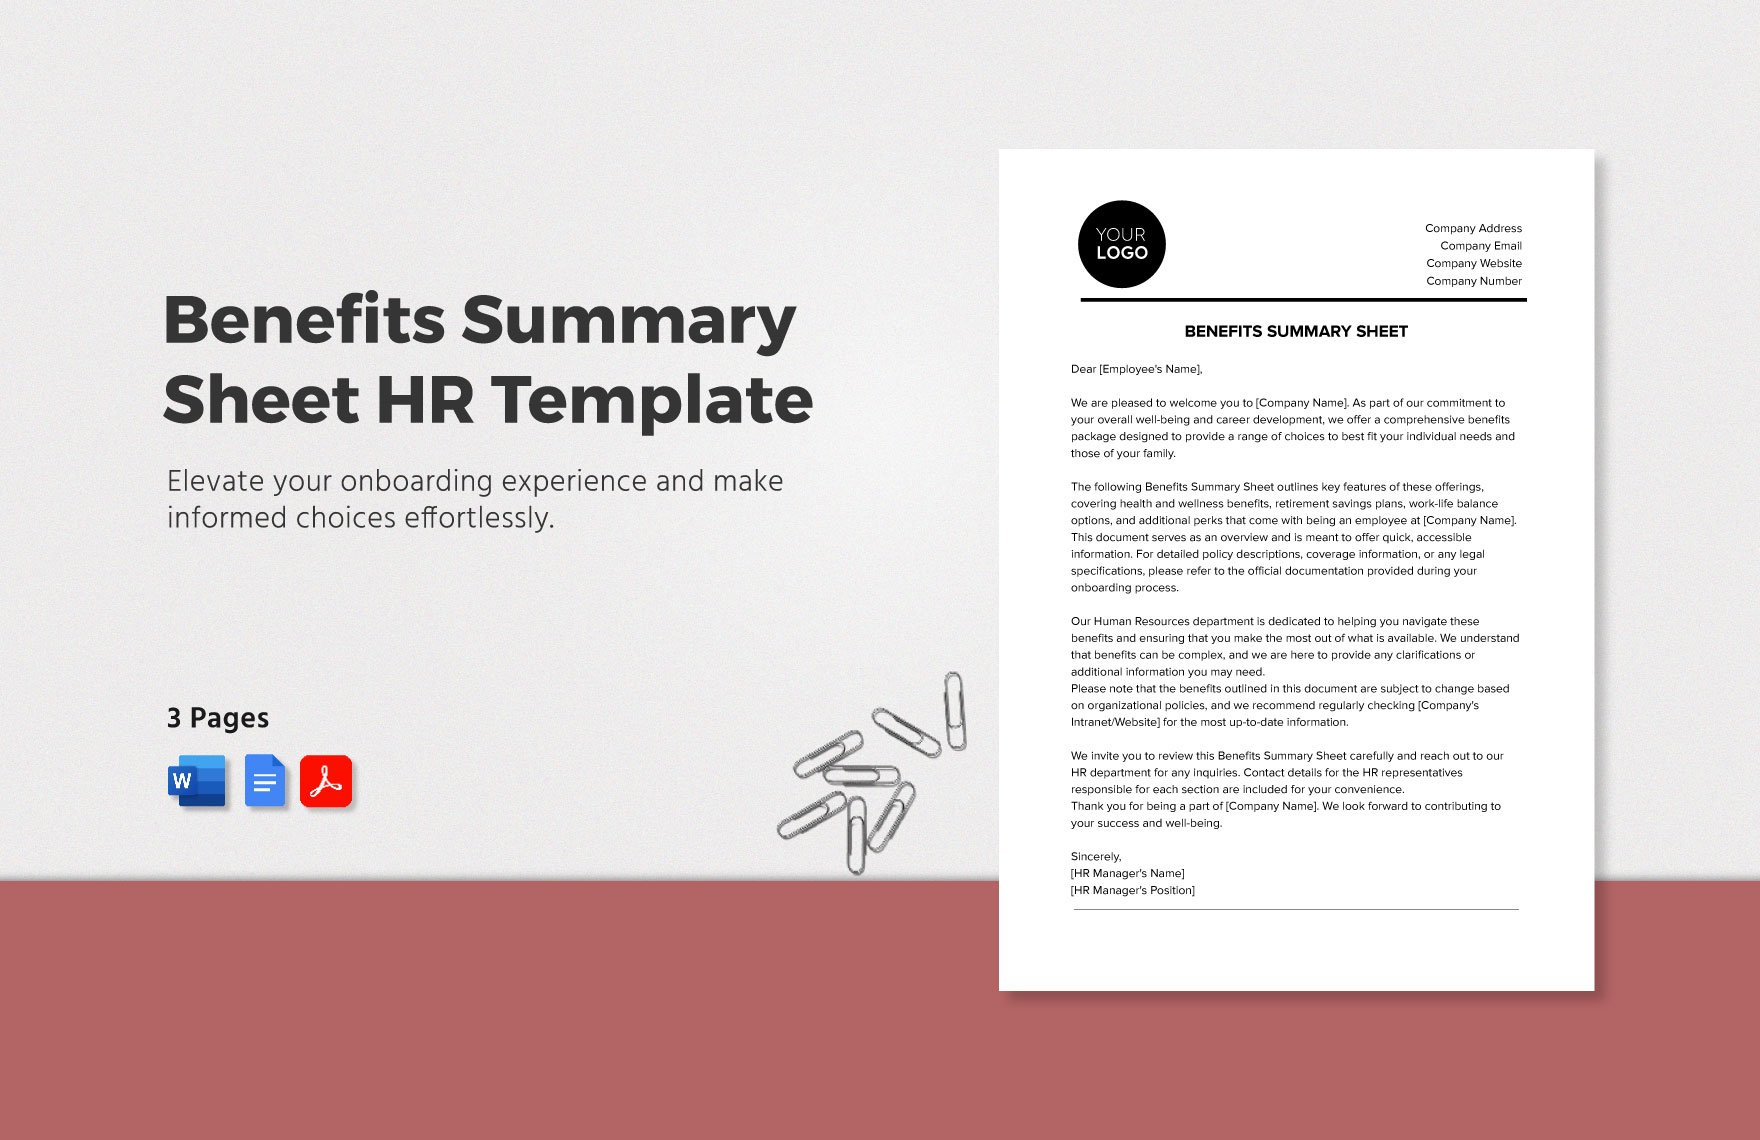 Benefits Summary Sheet HR Template in Word, Google Docs, PDF